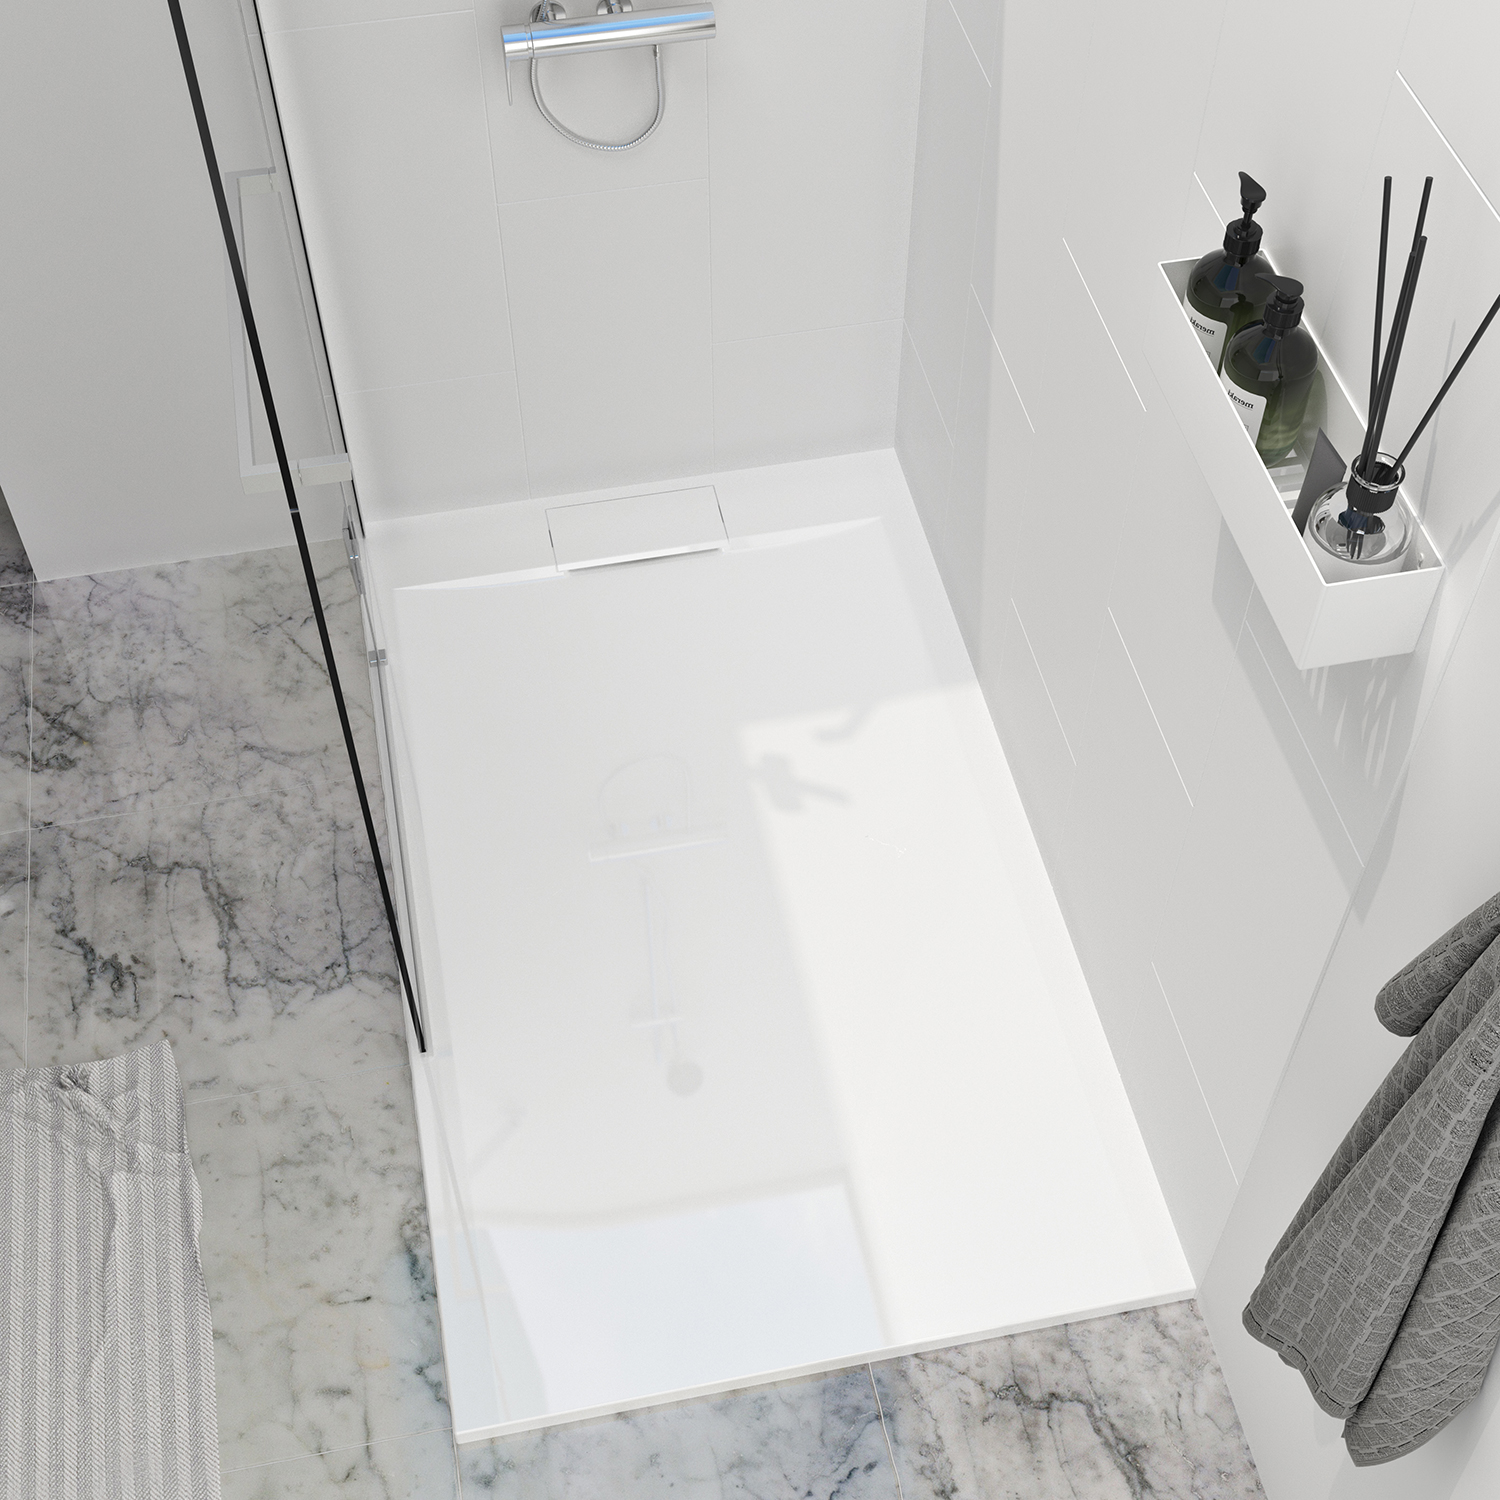 Shower base Liss 48 x 36, custom-made tile flange installation, in glossy white